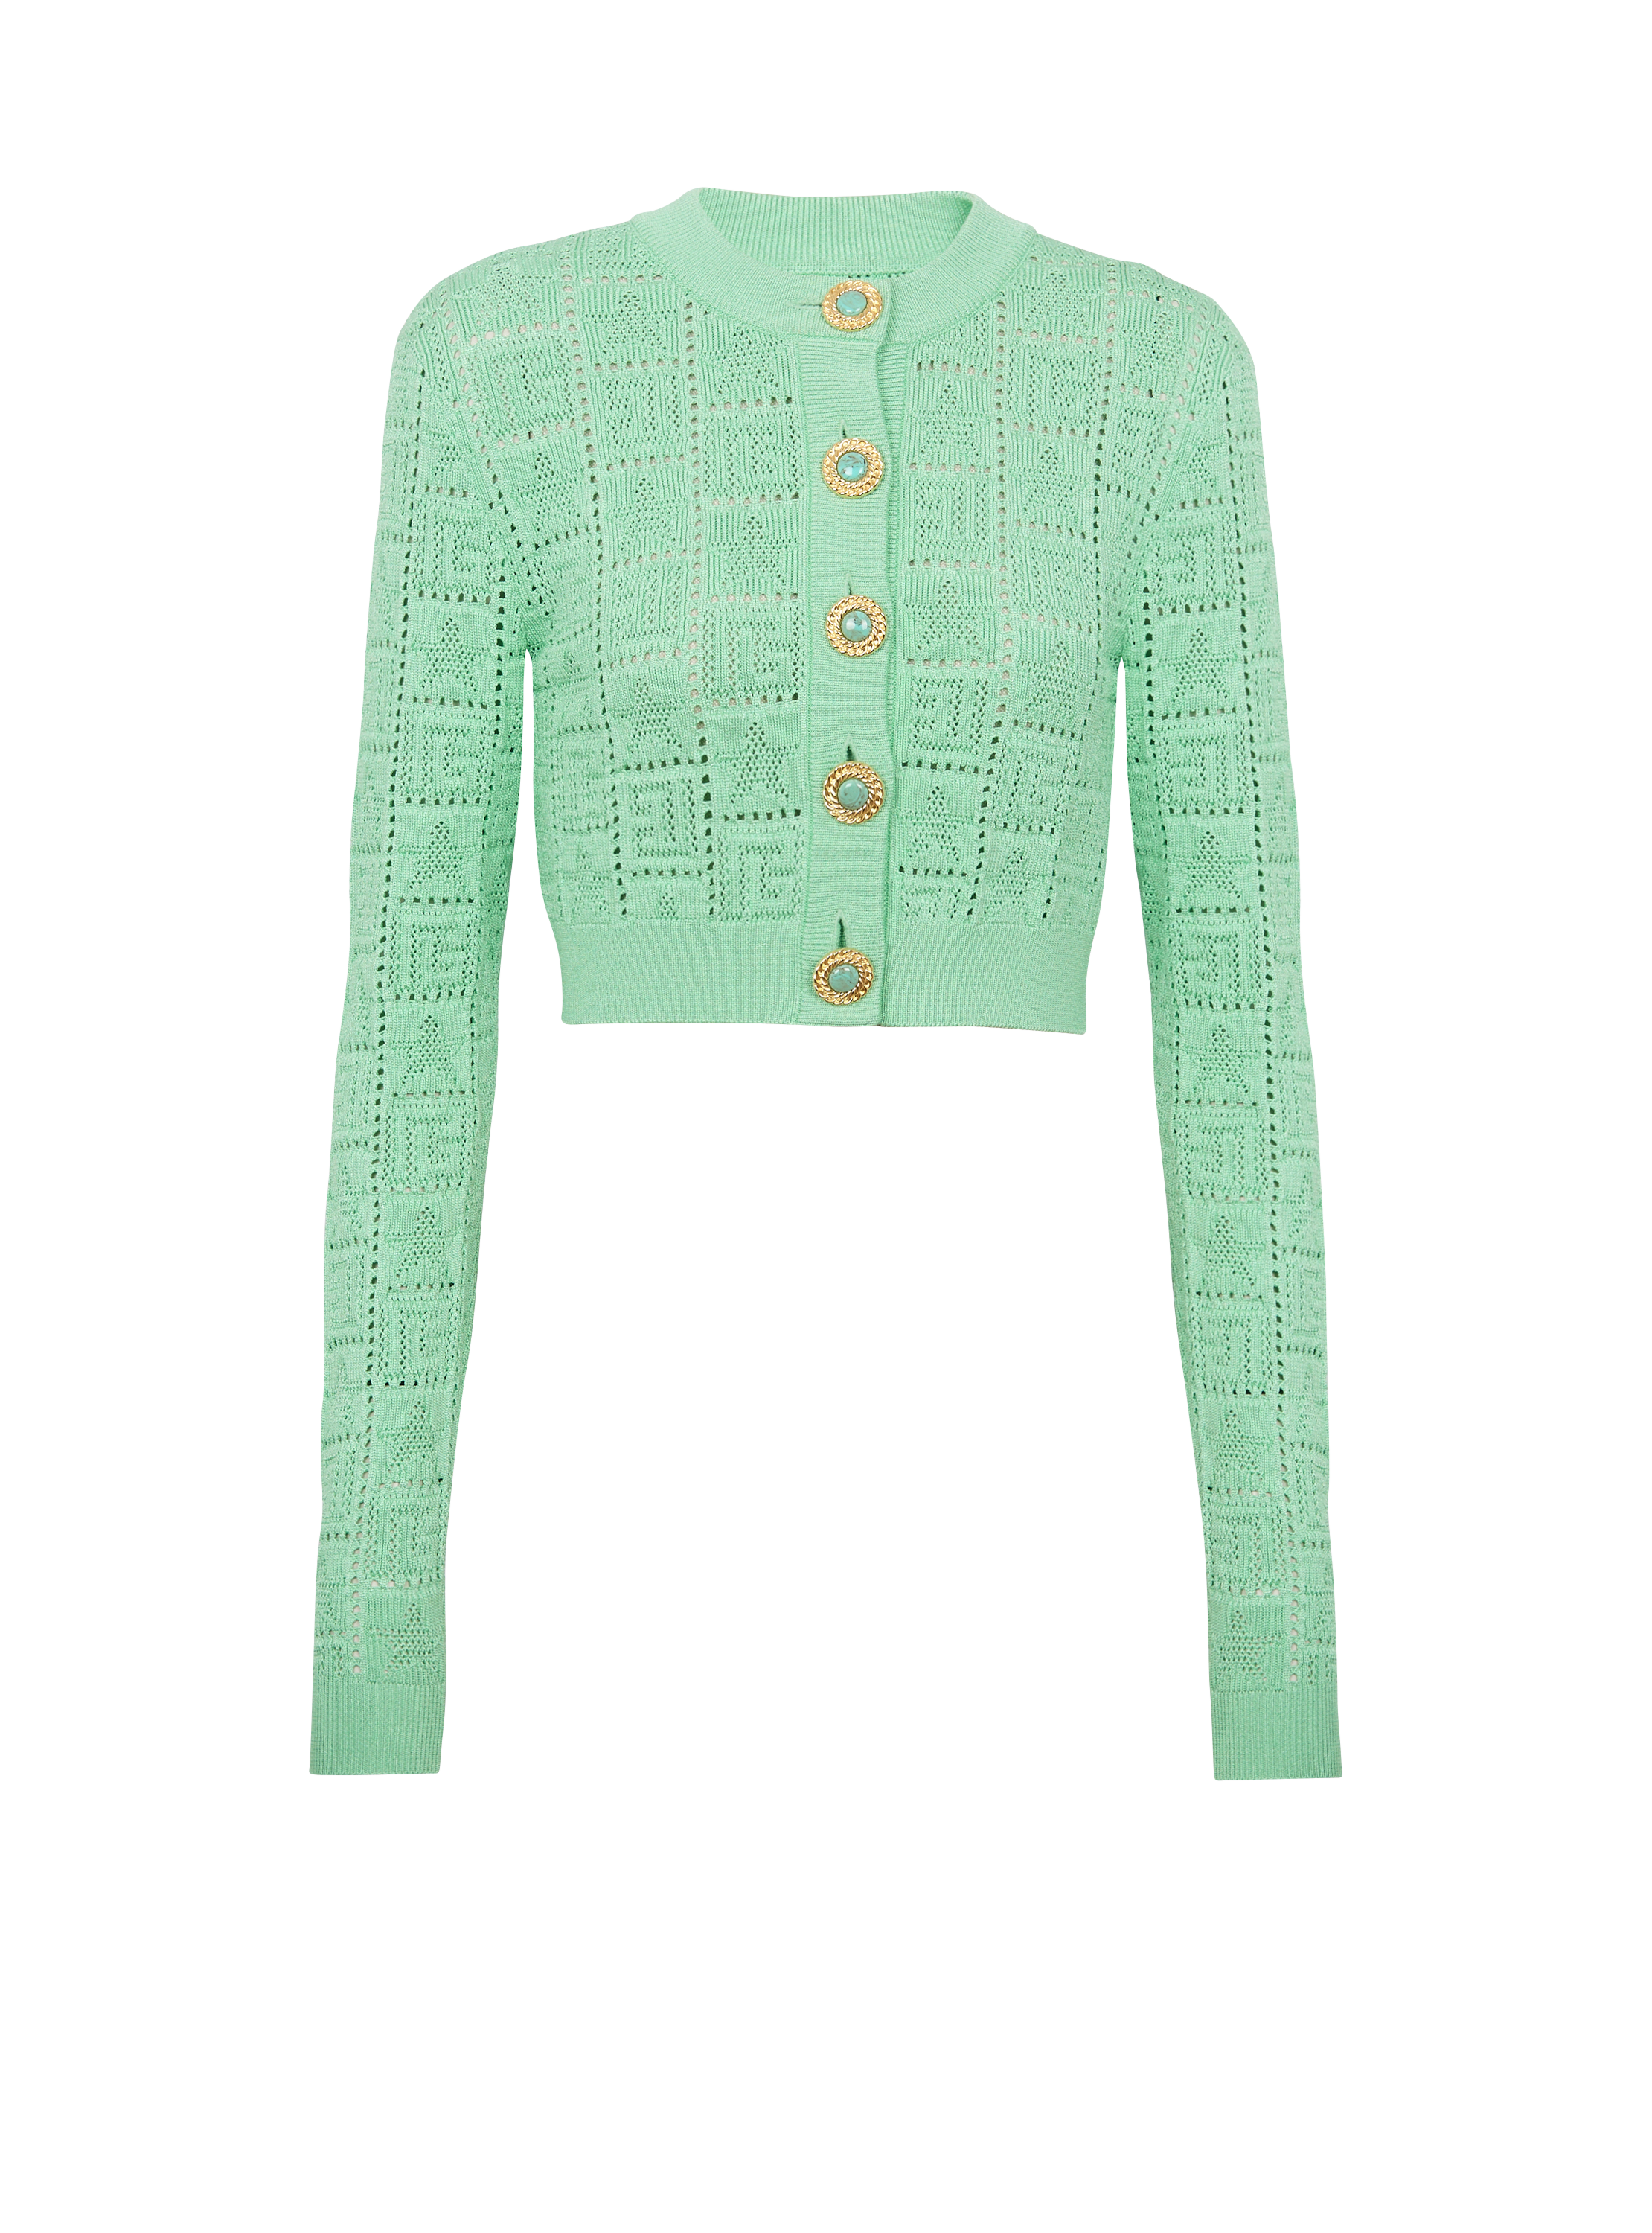 Monogram knit cardigan, green, hi-res